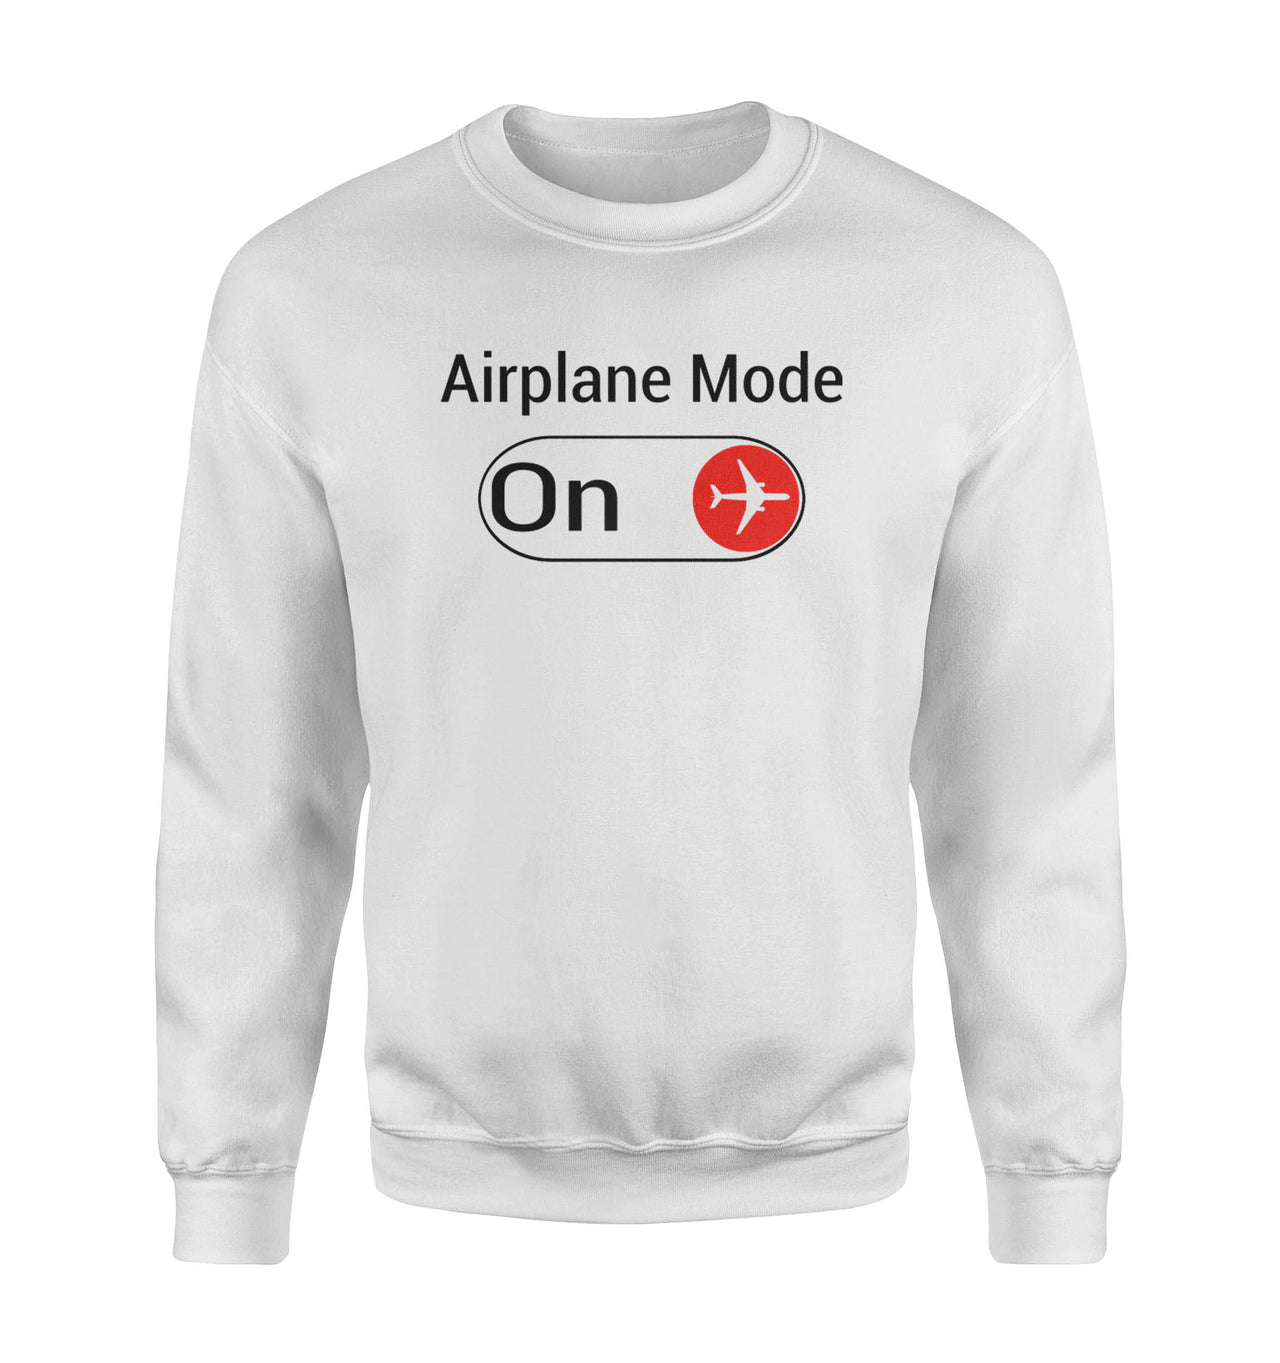 Airplane Mode On Designed Sweatshirts